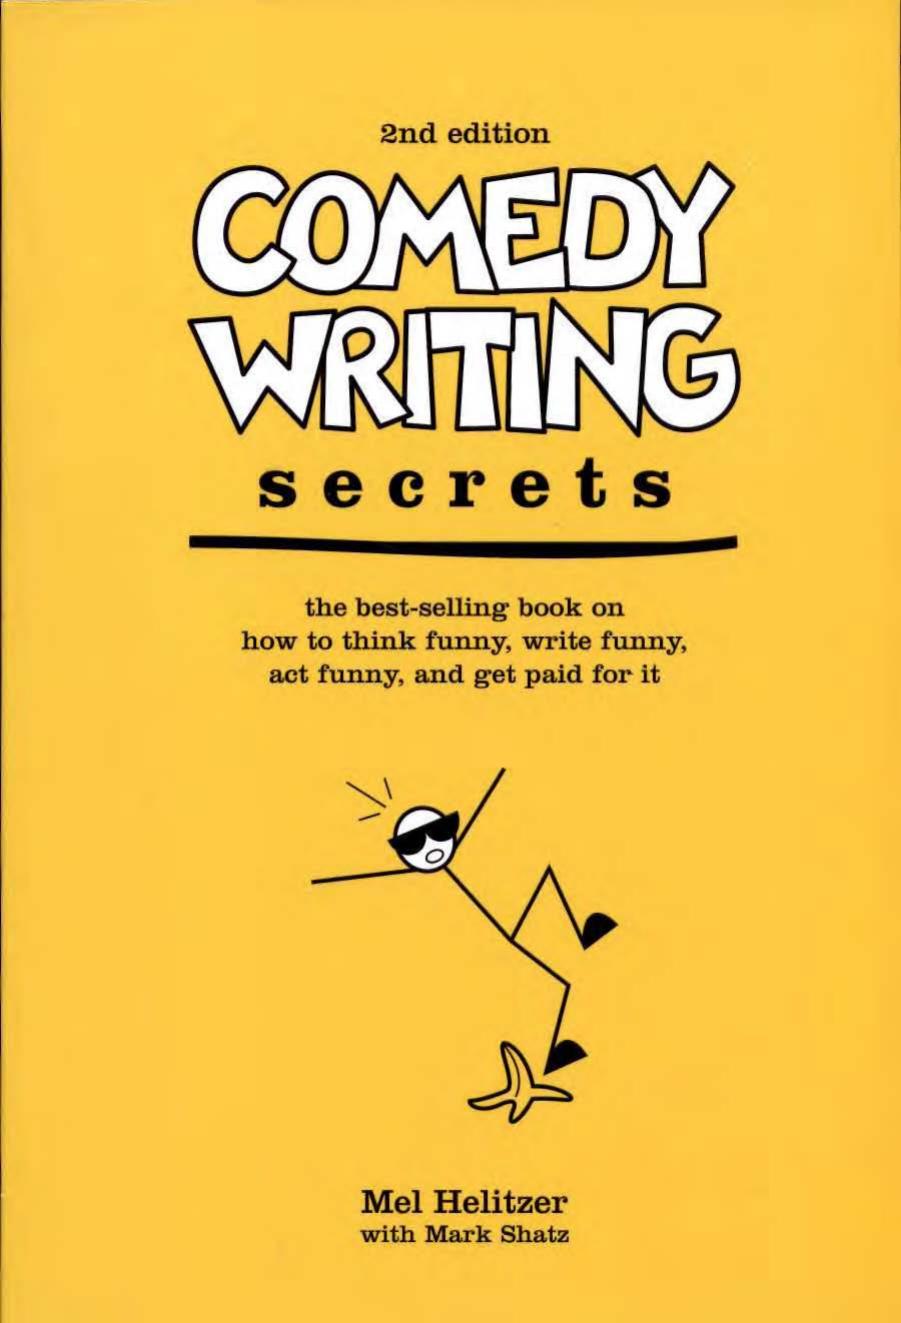 Comedy Writing Secrets - 2nd Edition